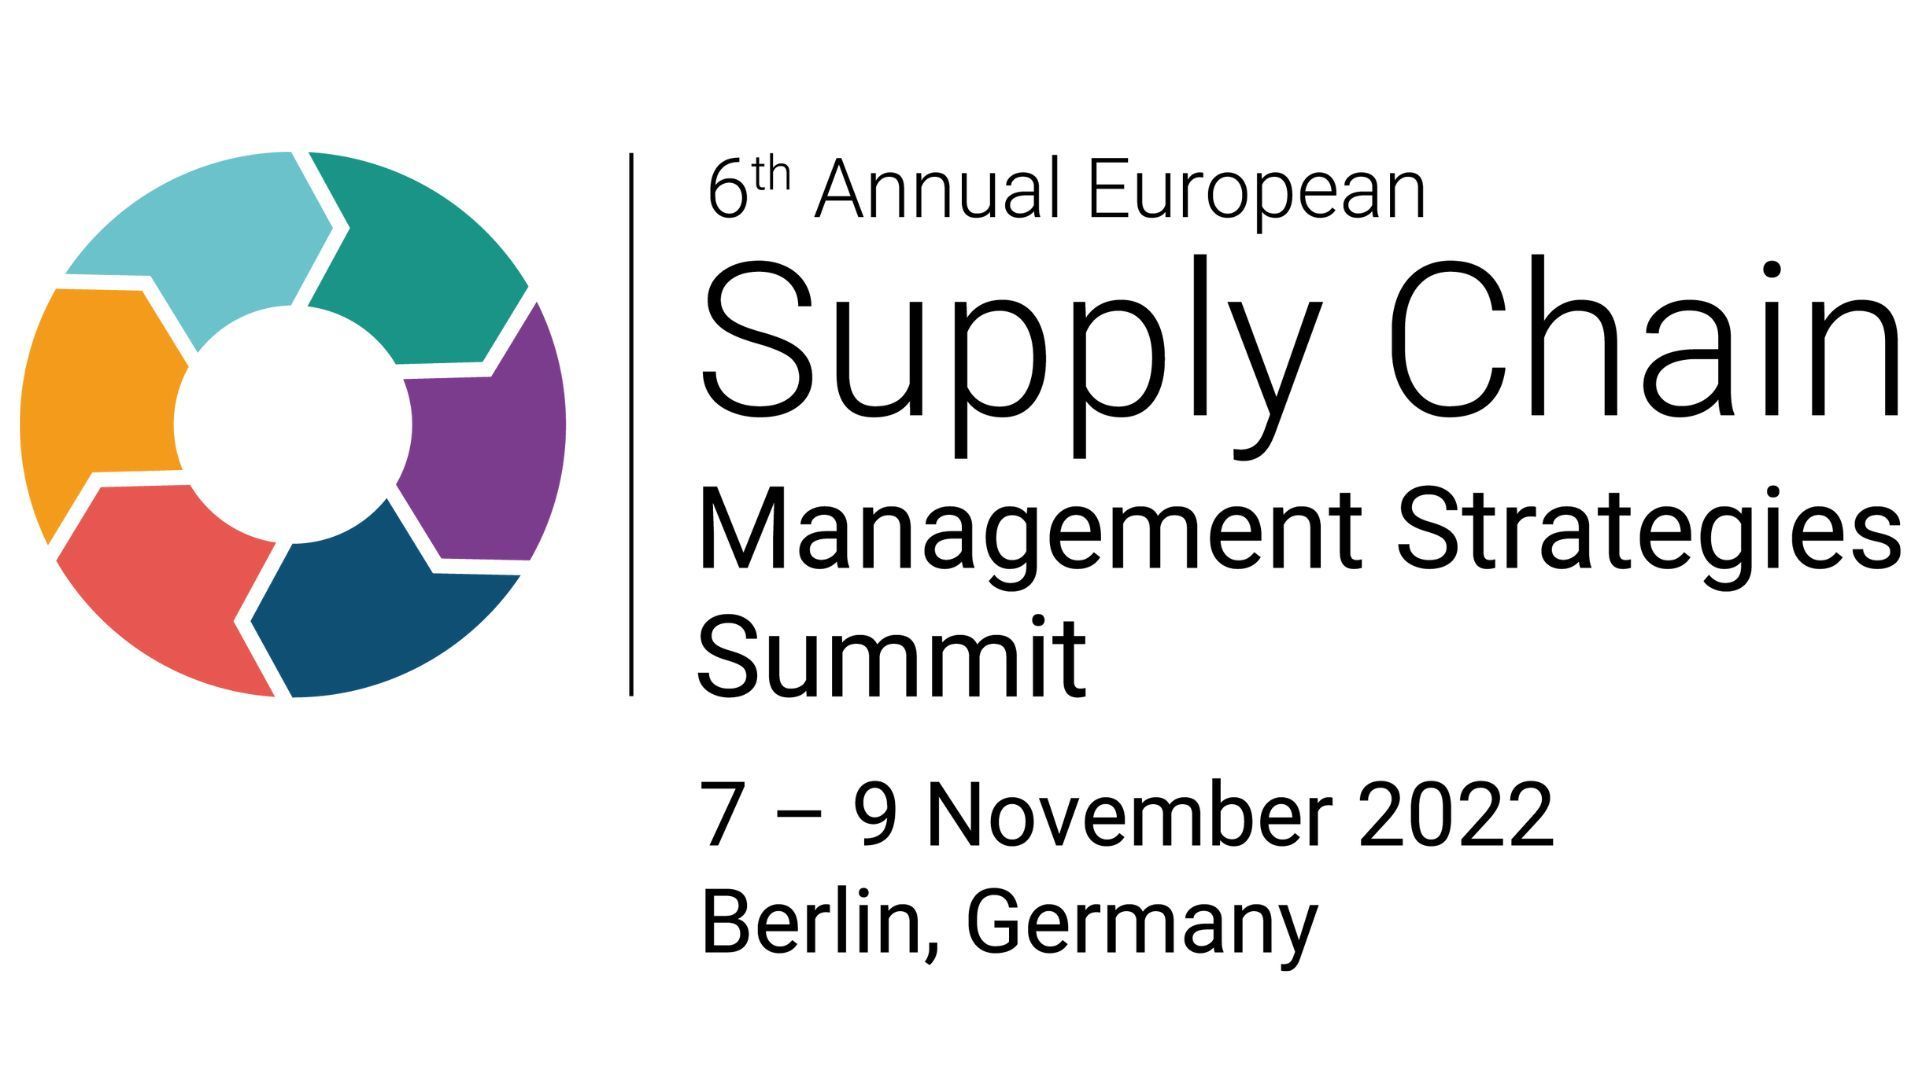 European Supply Chain Management Strategies Summit 2022 Conference